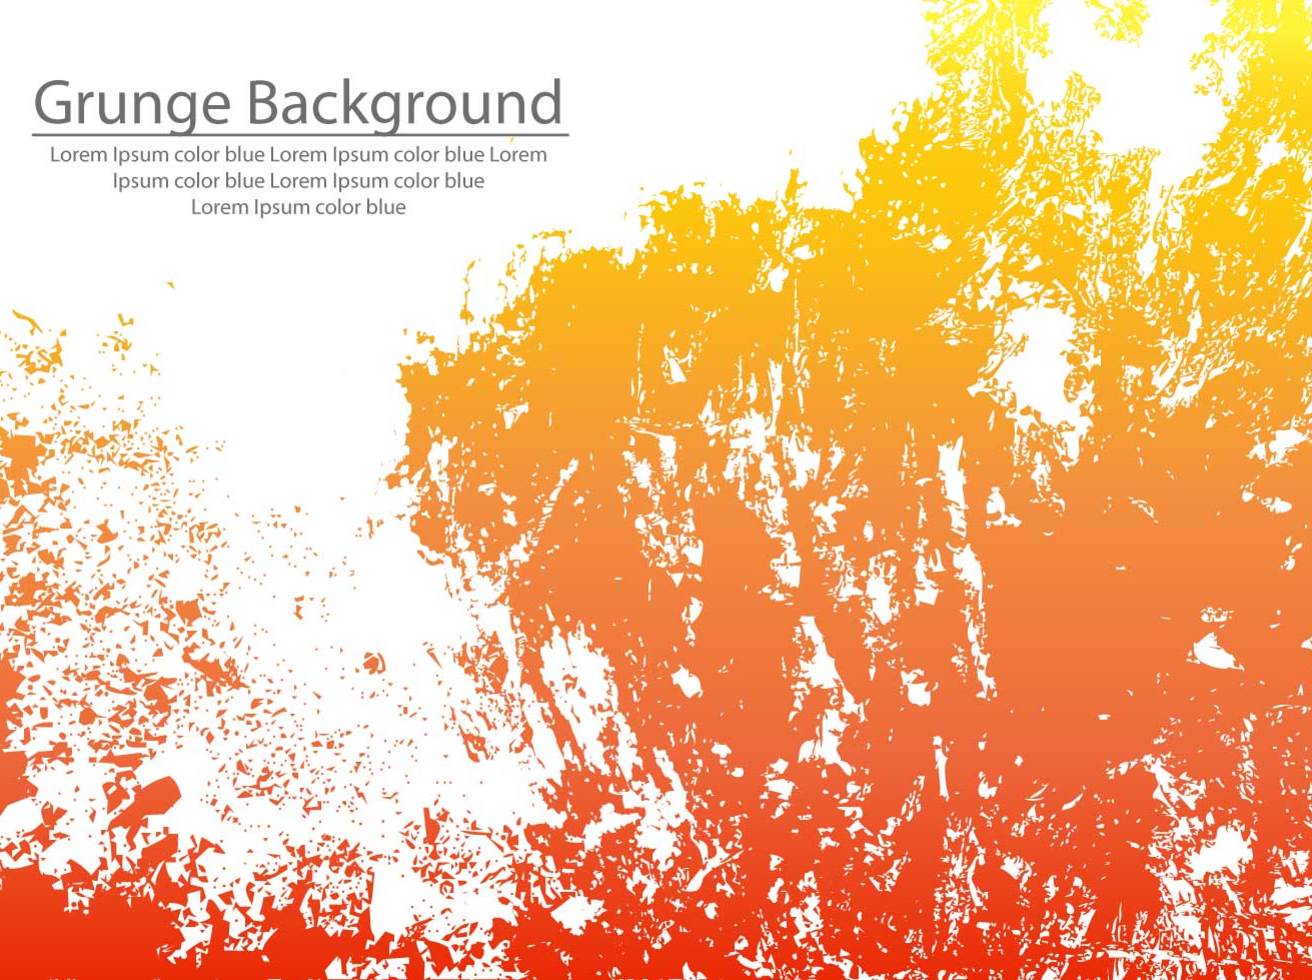 Grunge Texture Background Vector Art & Graphics 